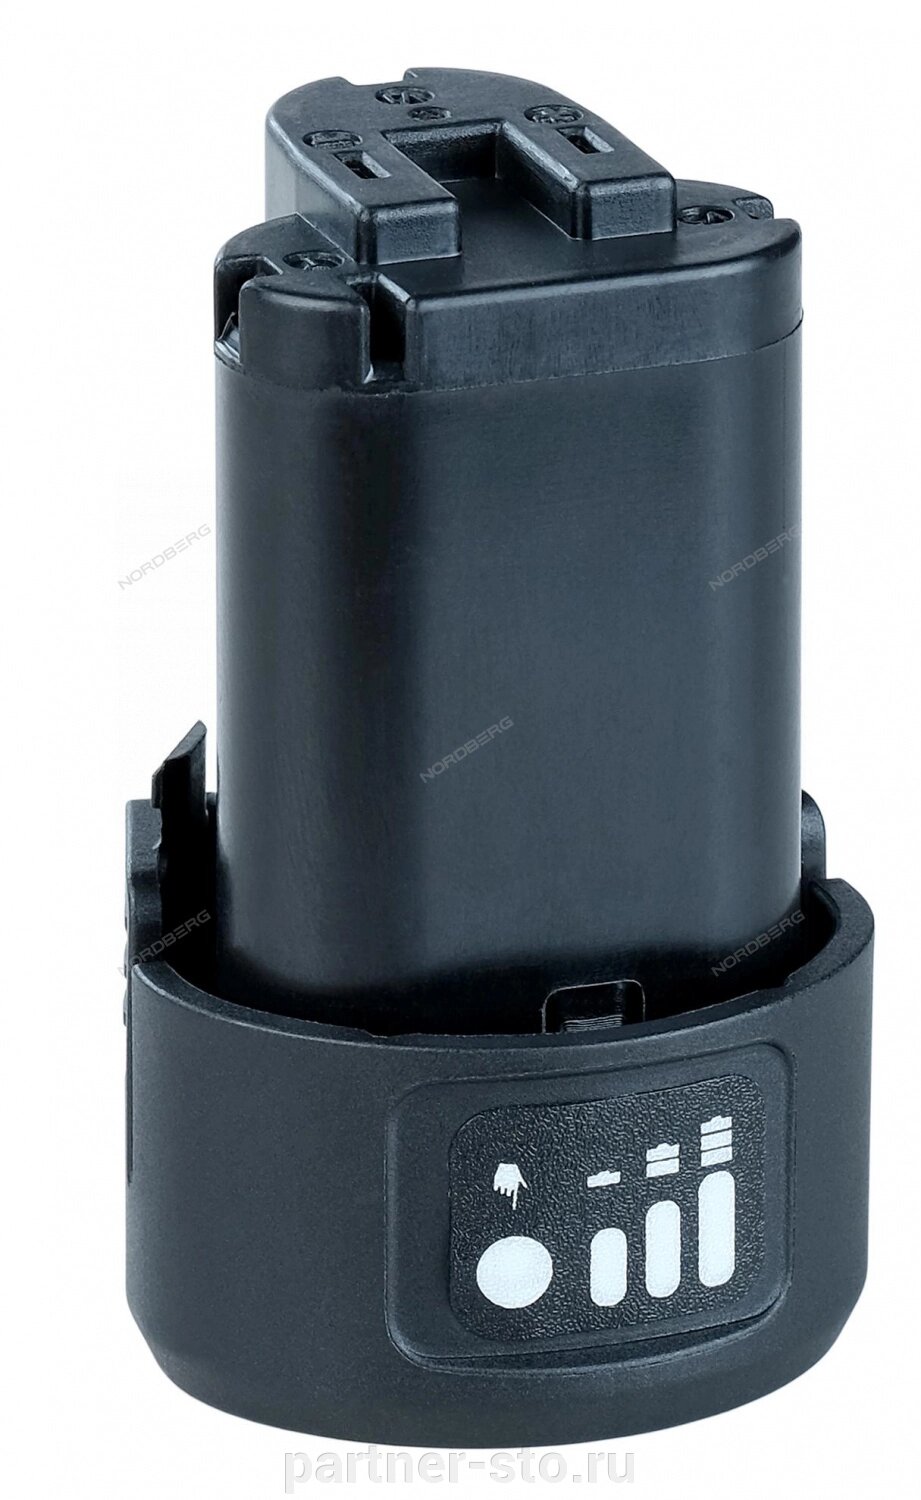 Аккумулятор, 12 В, 2 Ач NORDBERG NE9012 от компании Партнёр-СТО - оборудование и инструмент для автосервиса и шиномонтажа. - фото 1